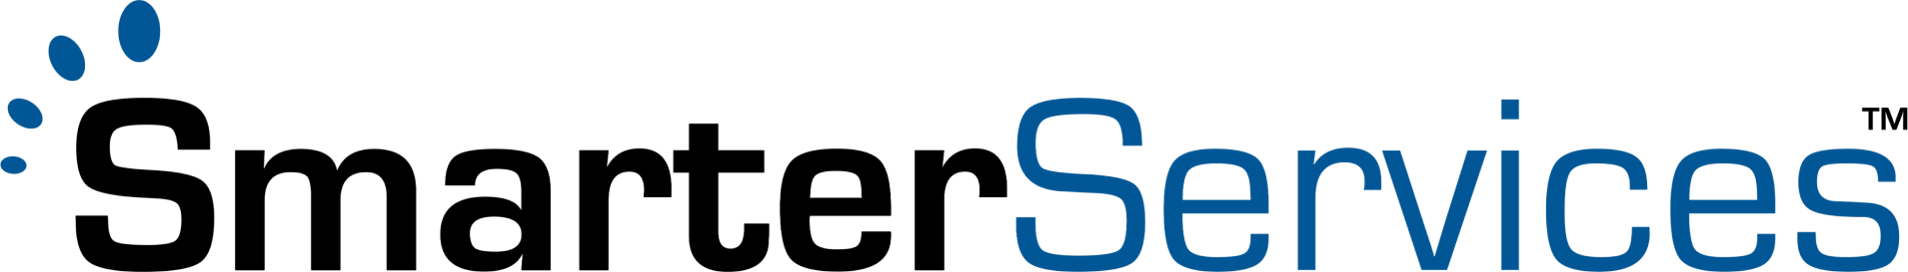 smarterservices-logo